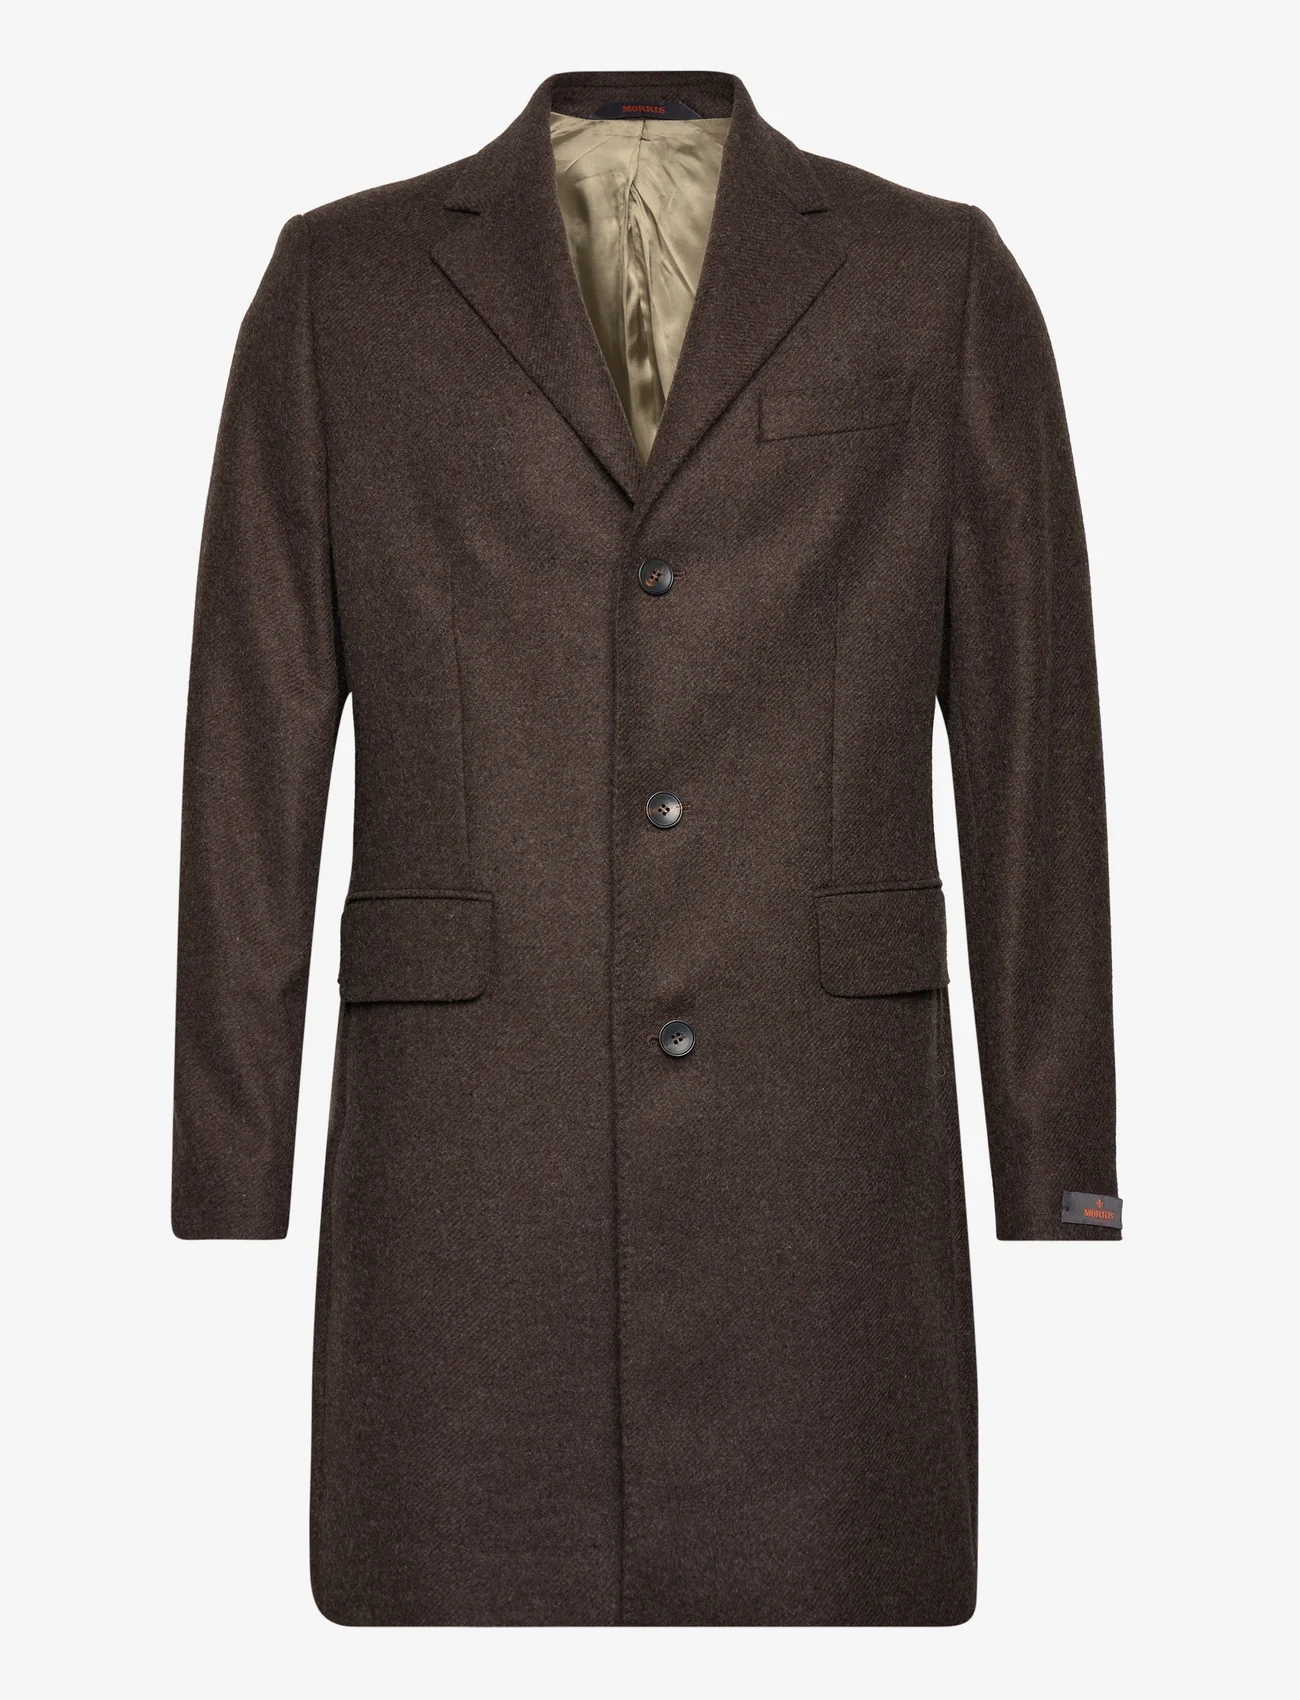 Morris - Morris Wool SB Coat - vinterjakker - brown - 0